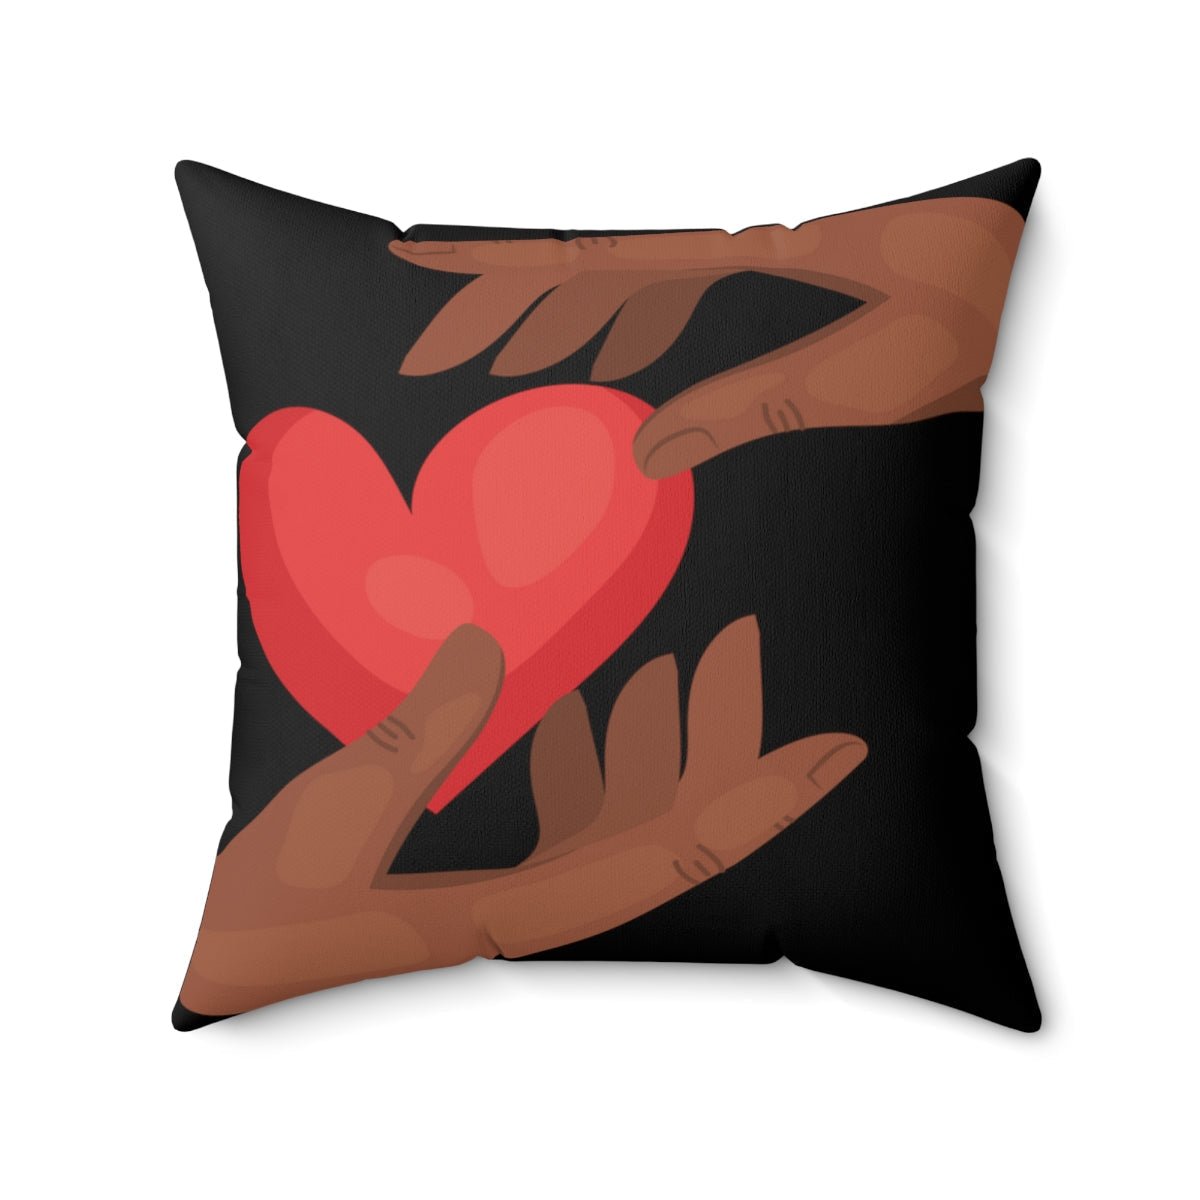 Black Love Pillow - The Trini Gee